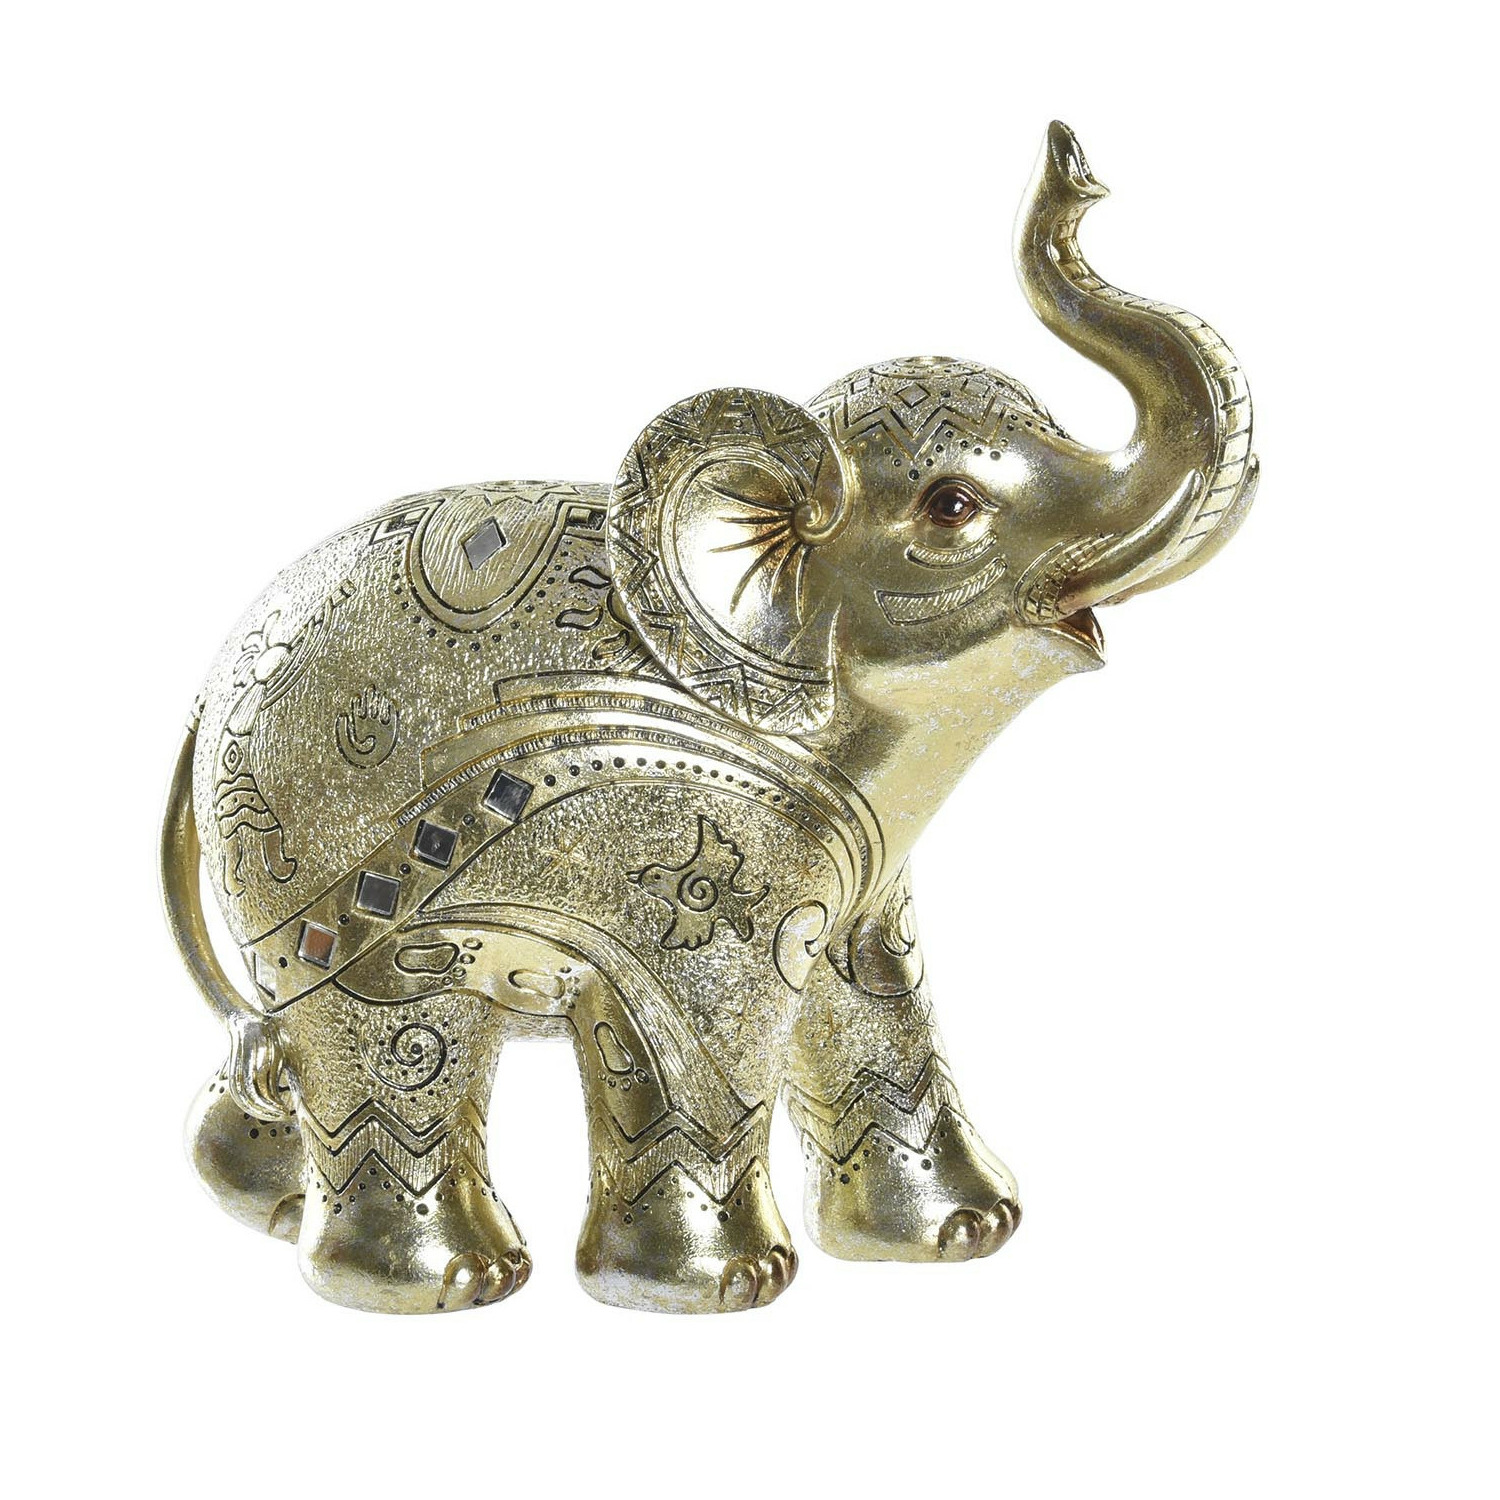 Items Olifant dierenbeeld - goud - polyresin - 24 x 10 x 24 cm - home decoratie -